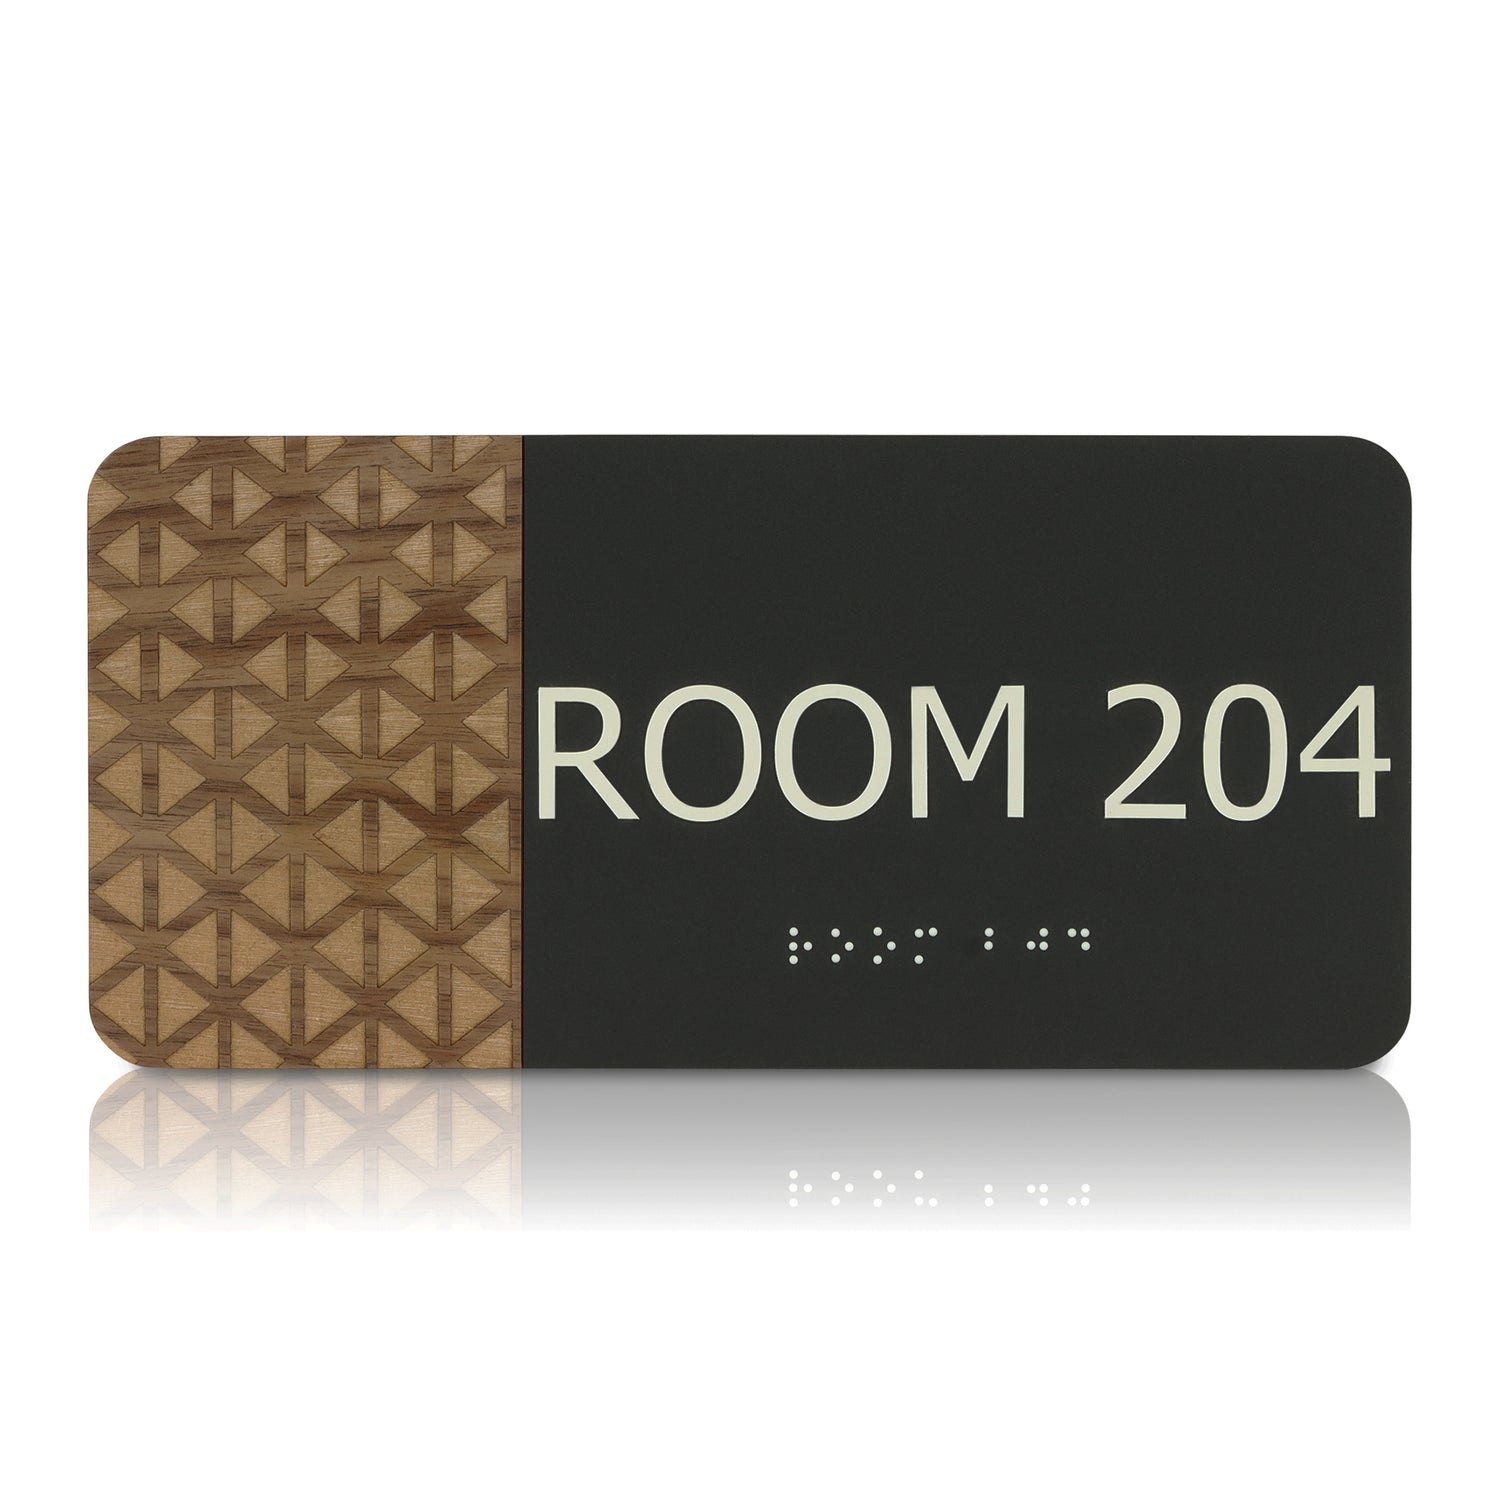 Room 204 Signage